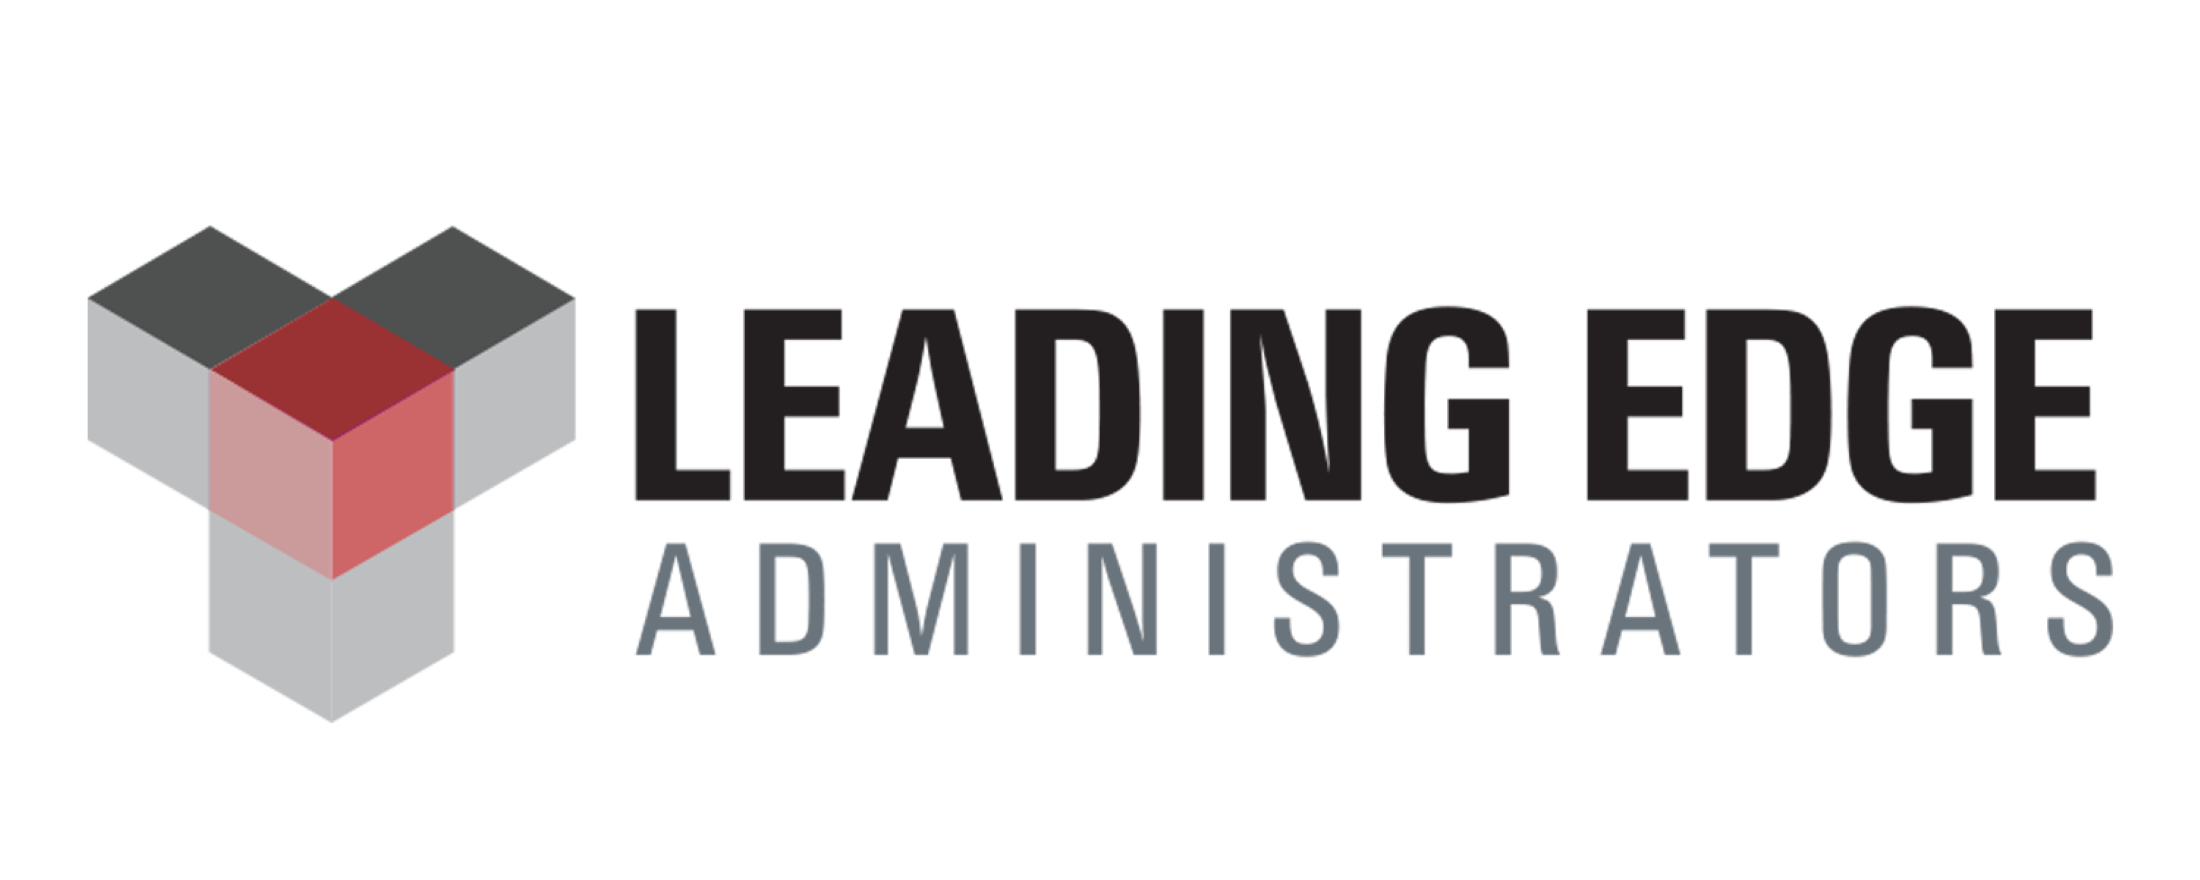 Leading Edge Administrators 